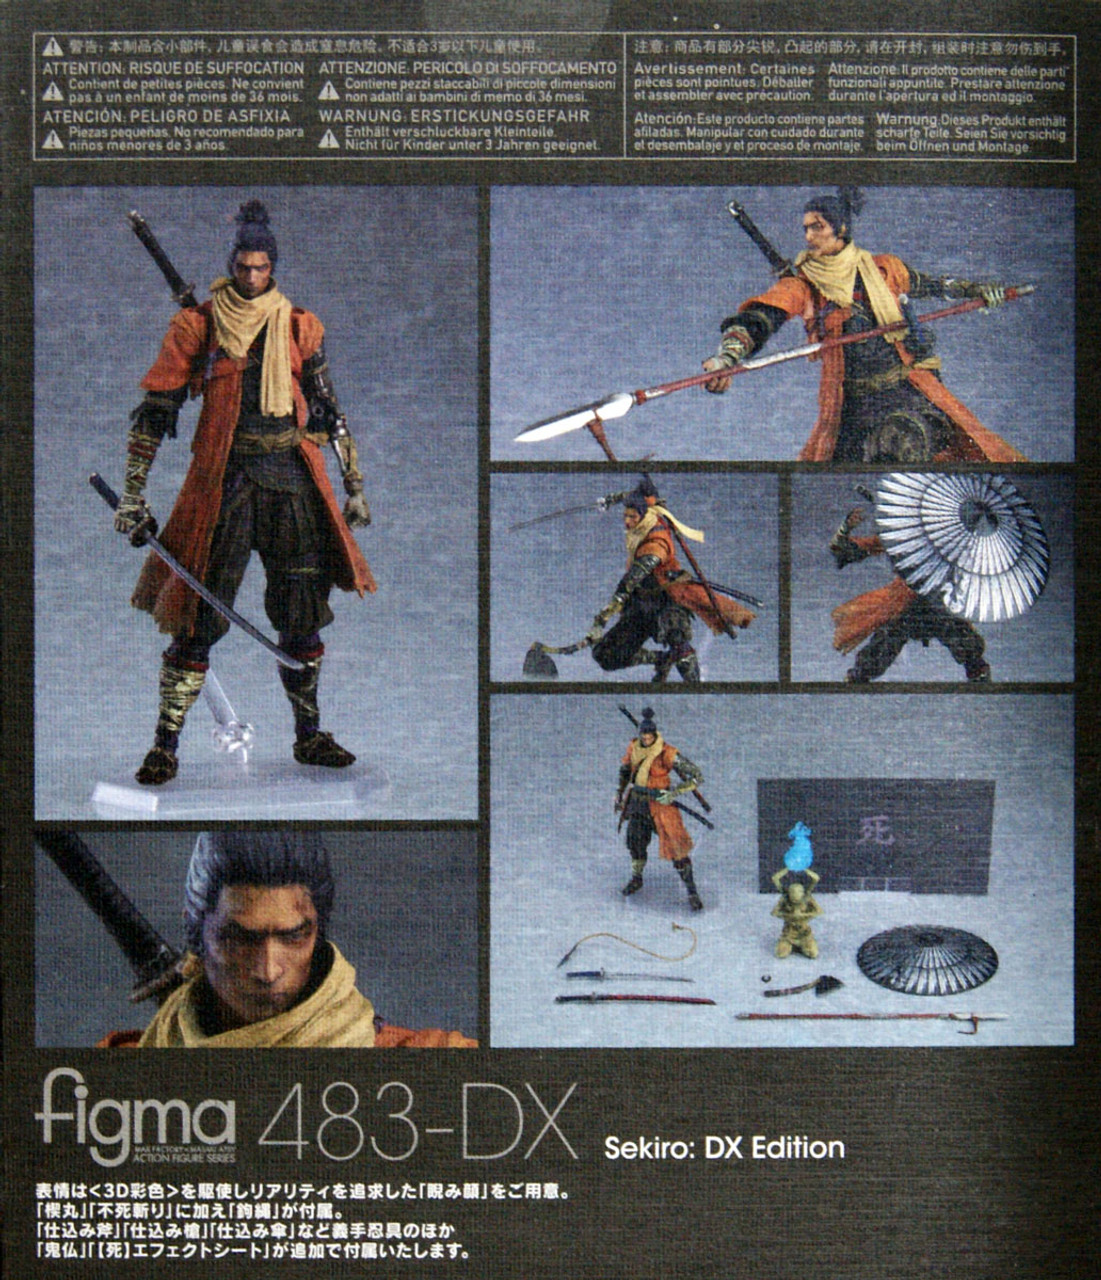 Figma 483-DX Sekiro: DX Edition (Sekiro Shadows Die Twice)